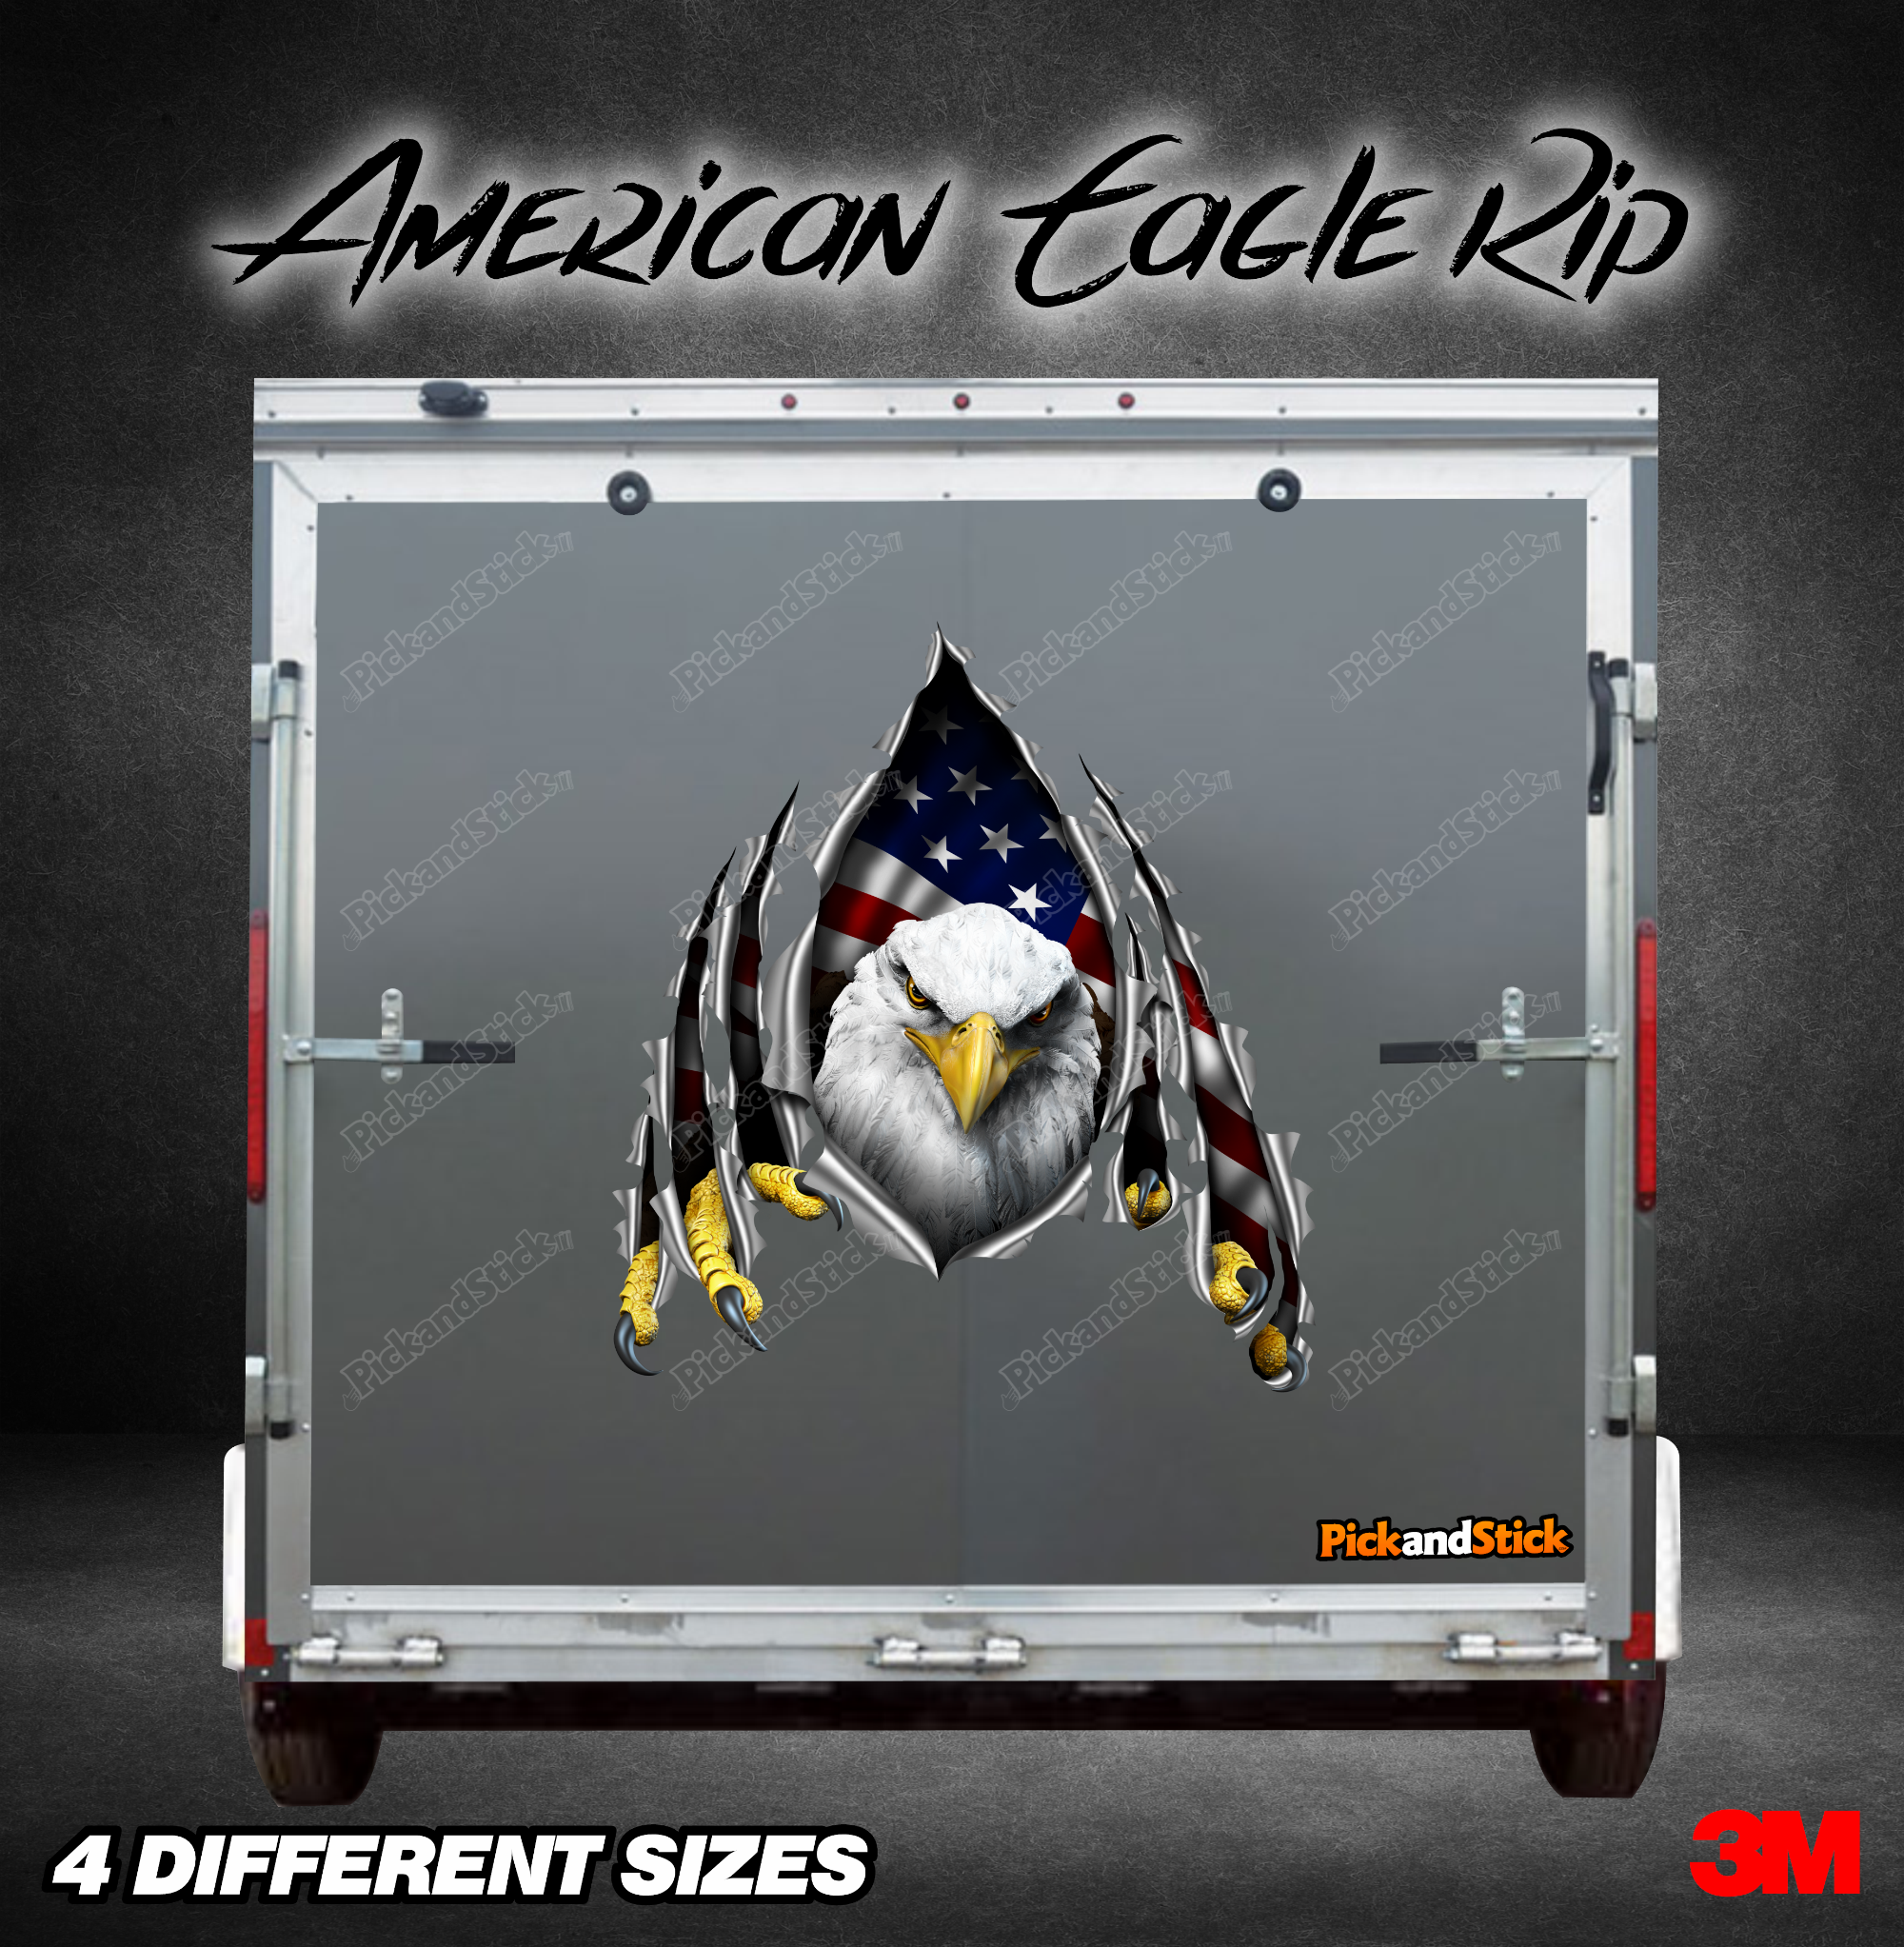 American Eagle Rip Graphic - PickandStickcom